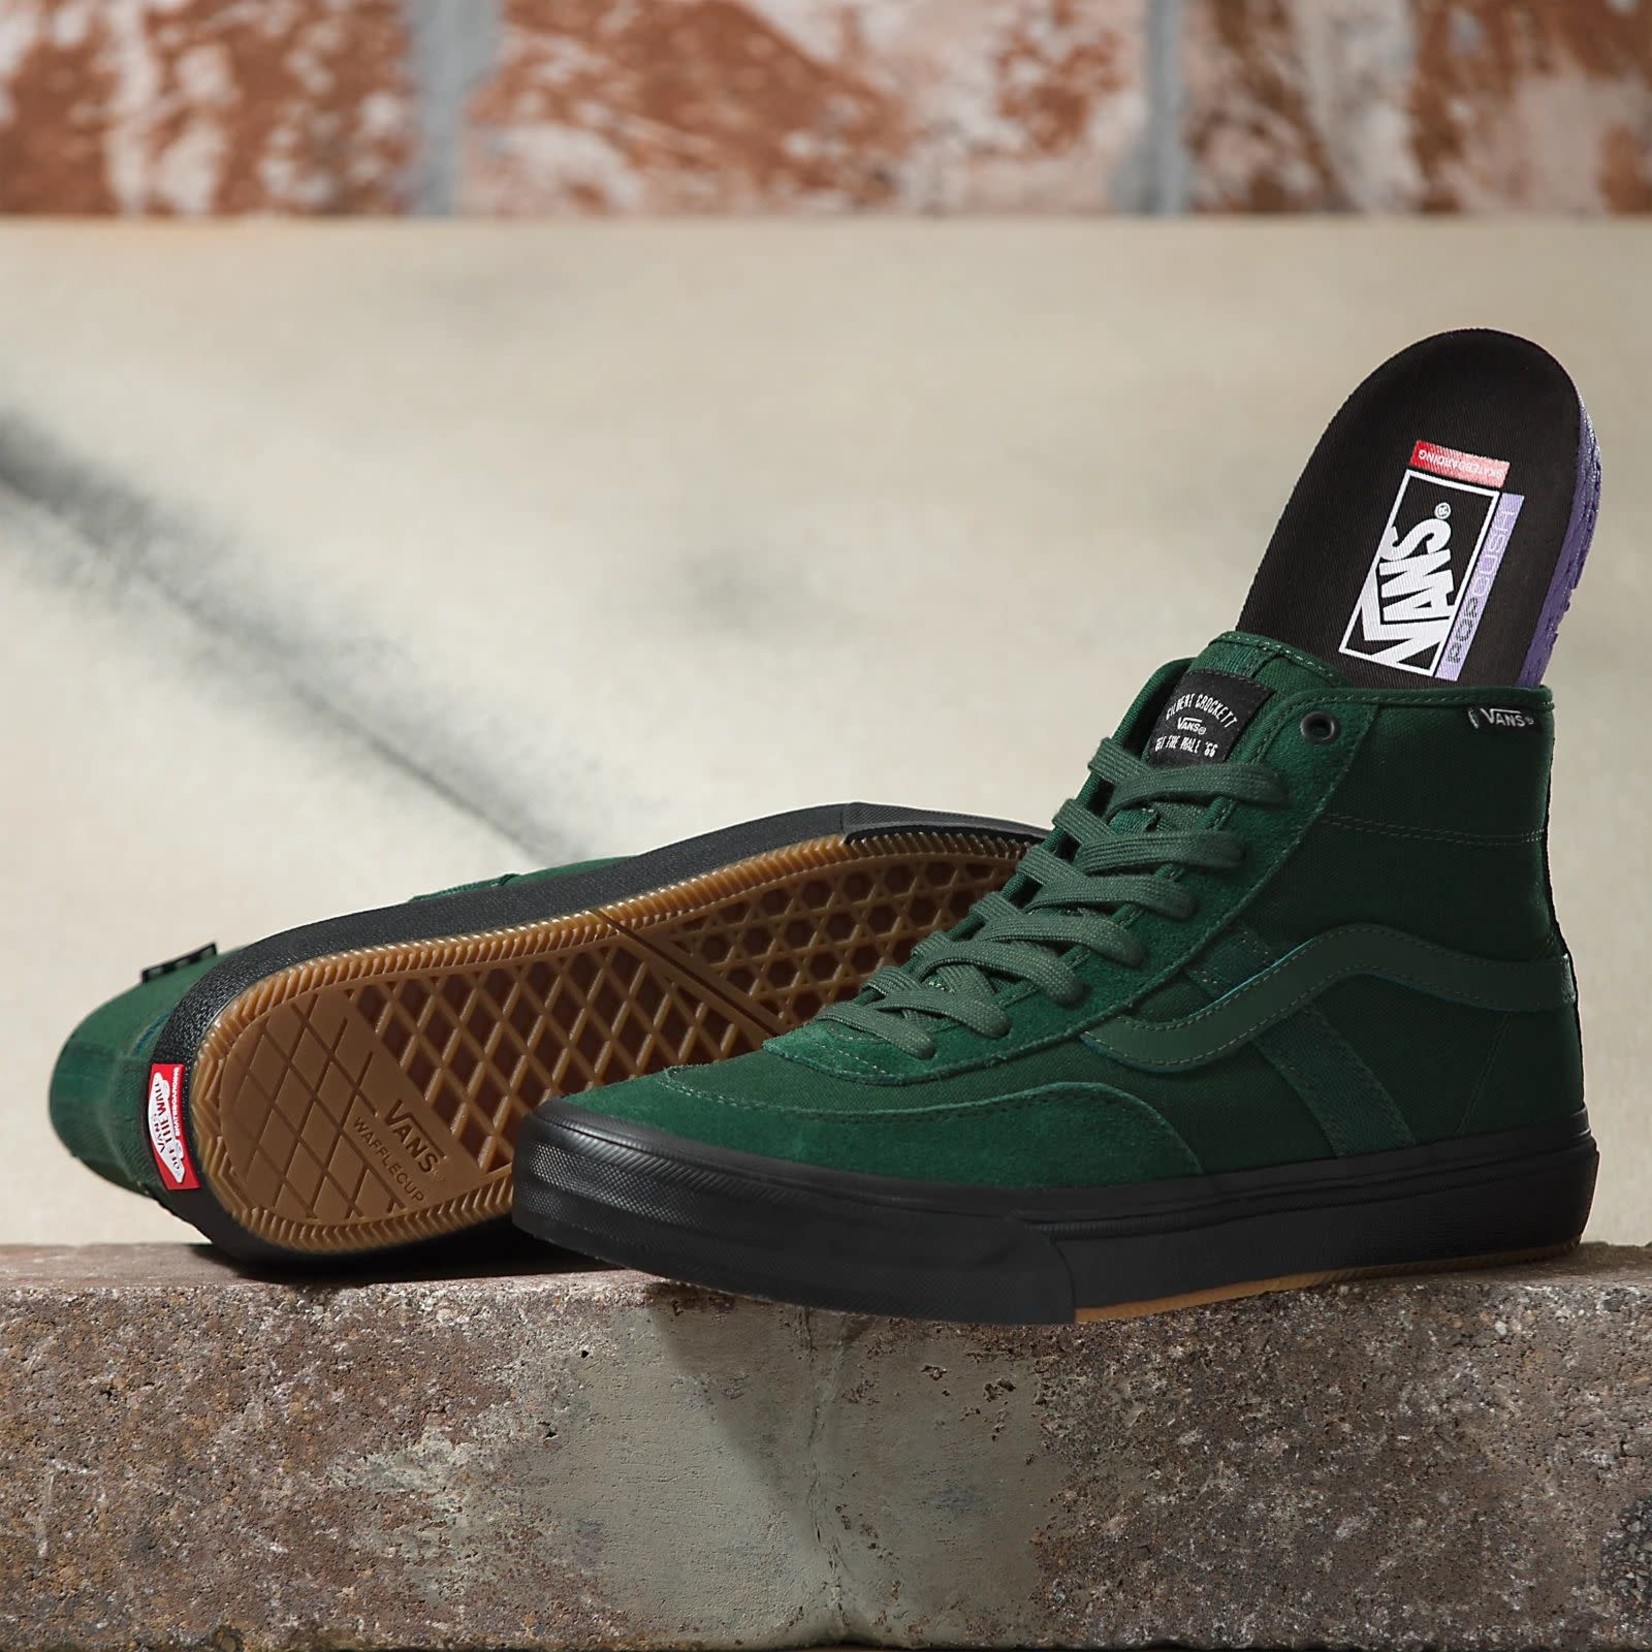 Vans Vans Gilbert Crockett High Skate Shoe - Dark Green/Black